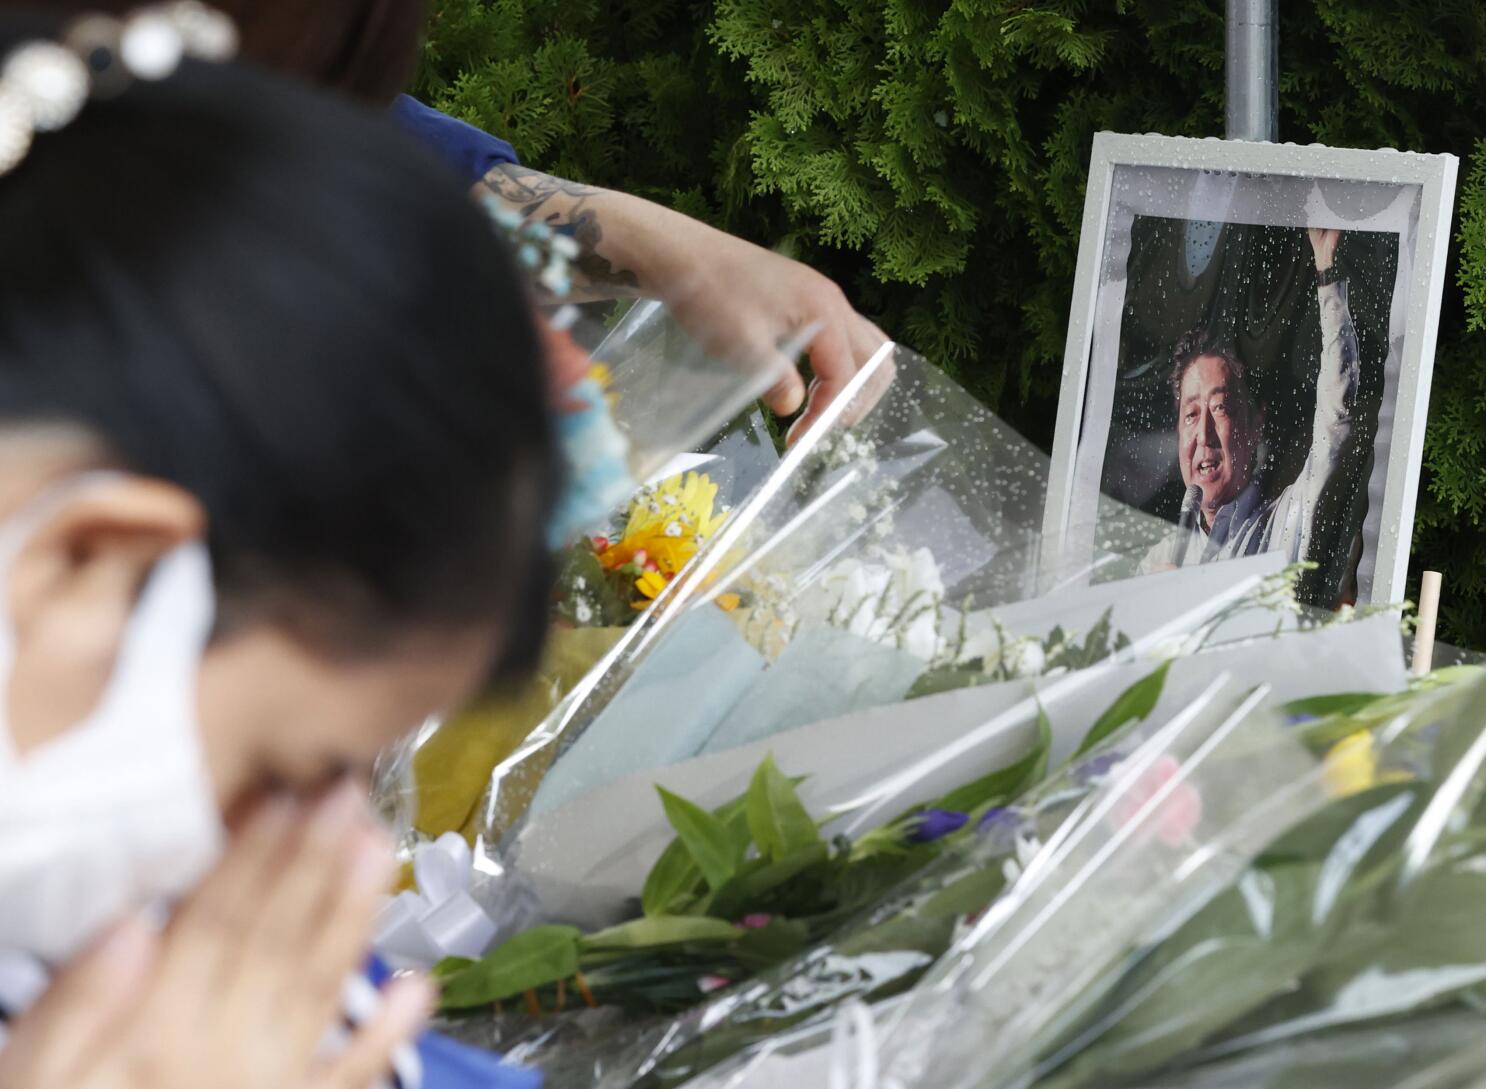 Abe's death raises security questions as Japan mourns